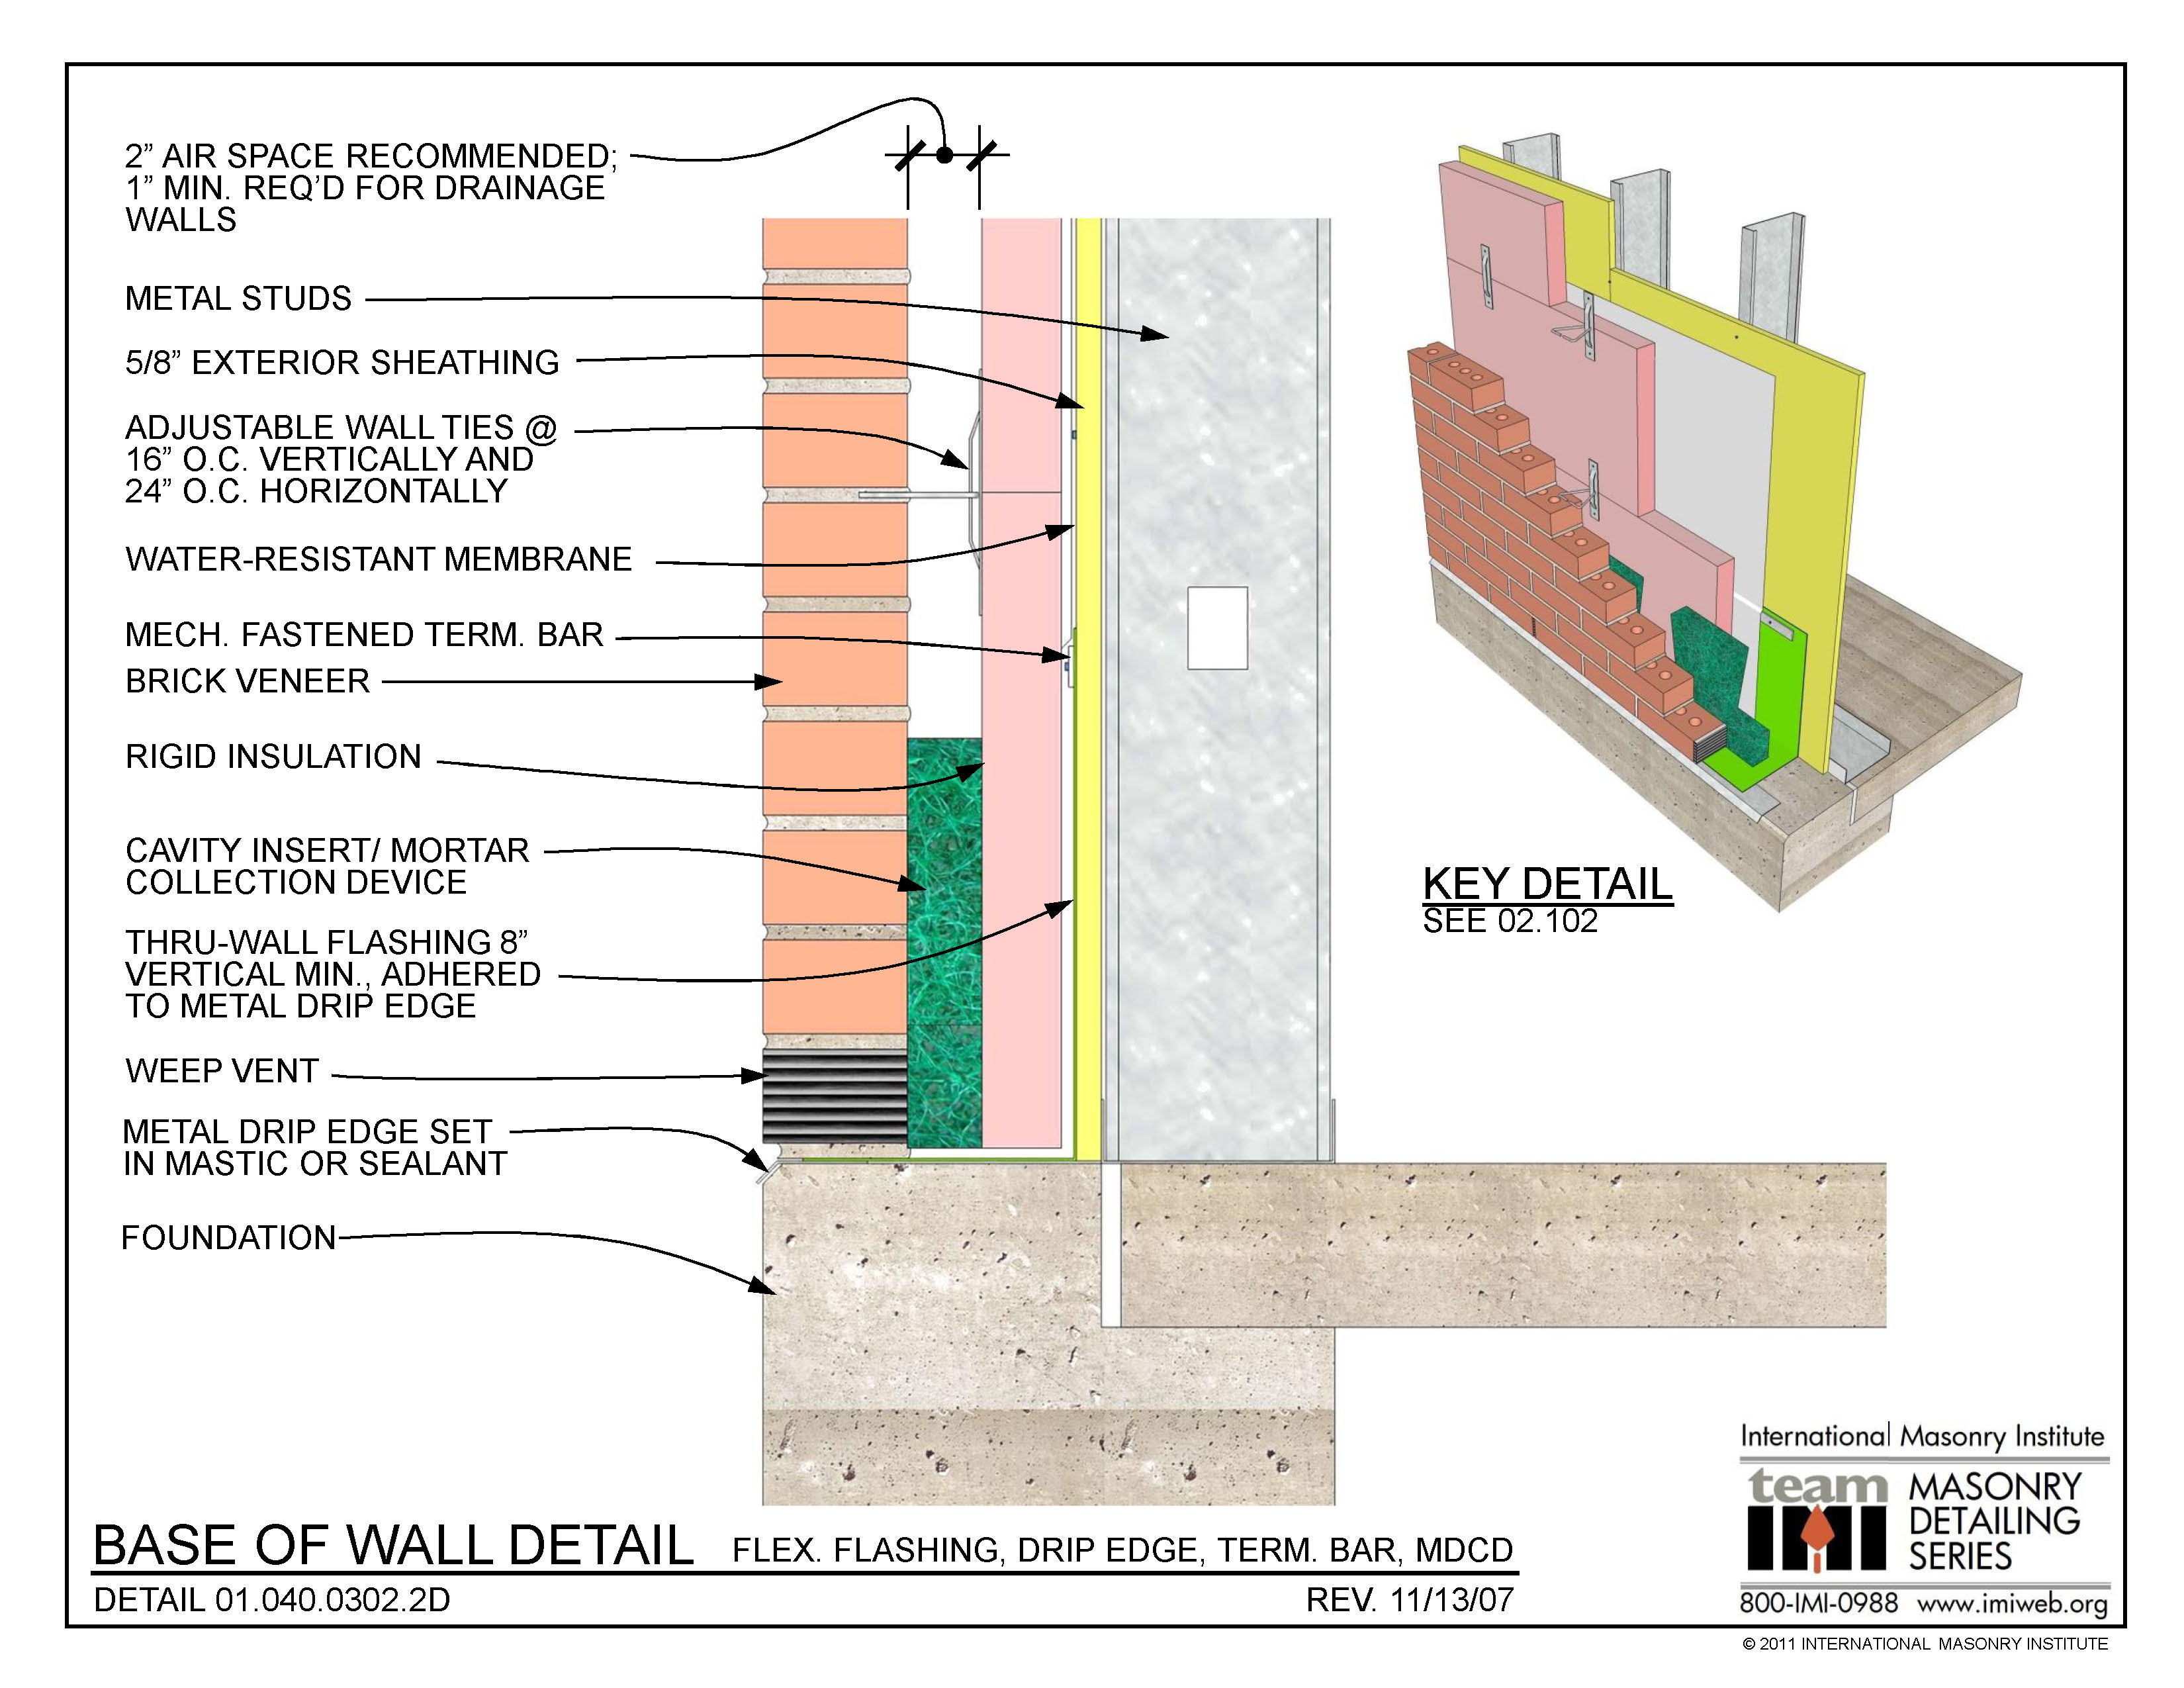 01.040.0302.2D Base of Wall Detail Flex. Flashing, Drip Edge, Term. Bar, MDCD International